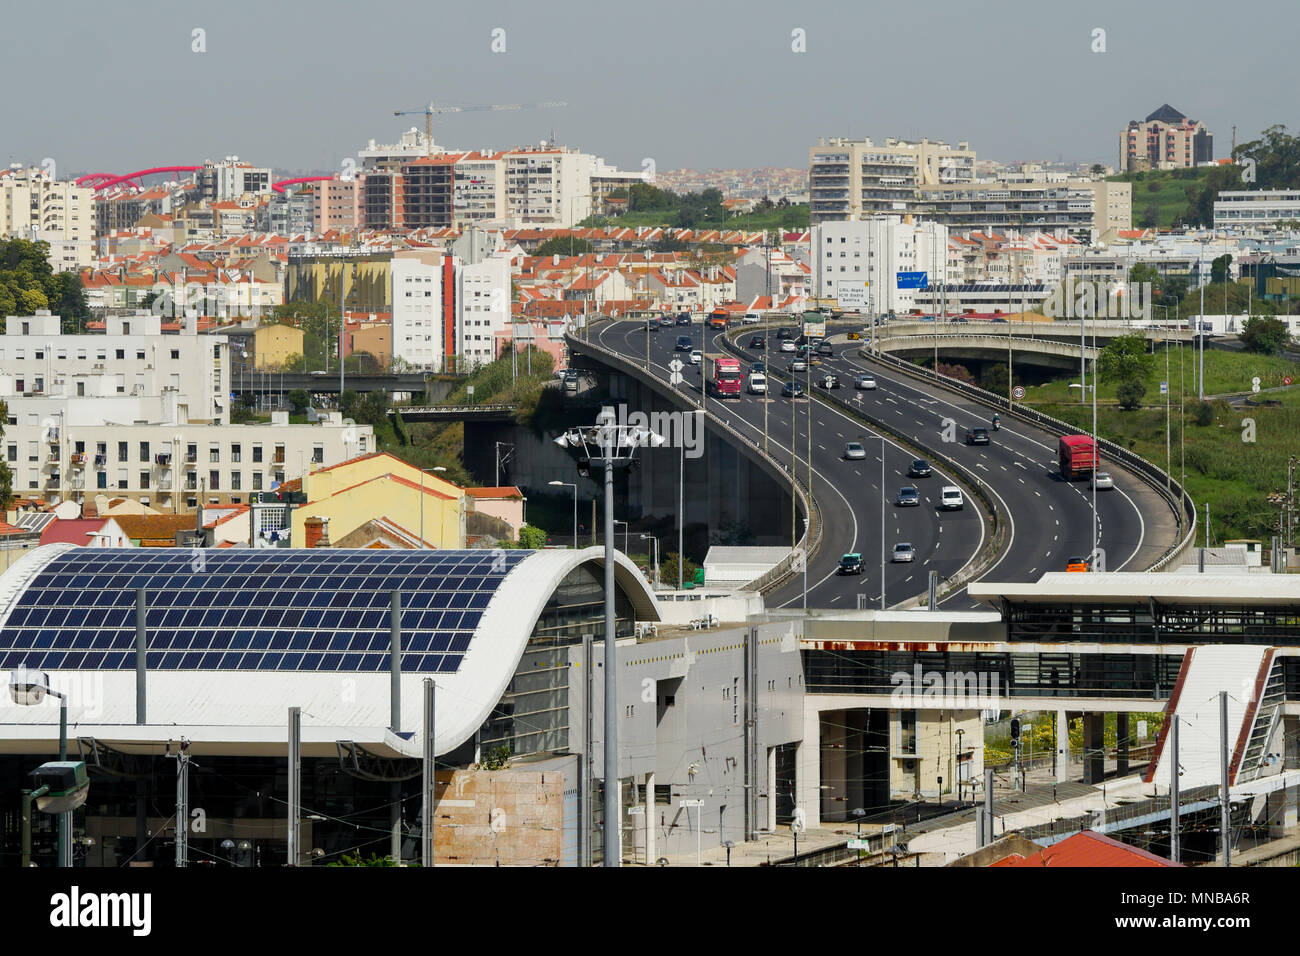 General view of the area surrounding Sete Rios raiilway station, Lisbon, Portugal Stock Photo